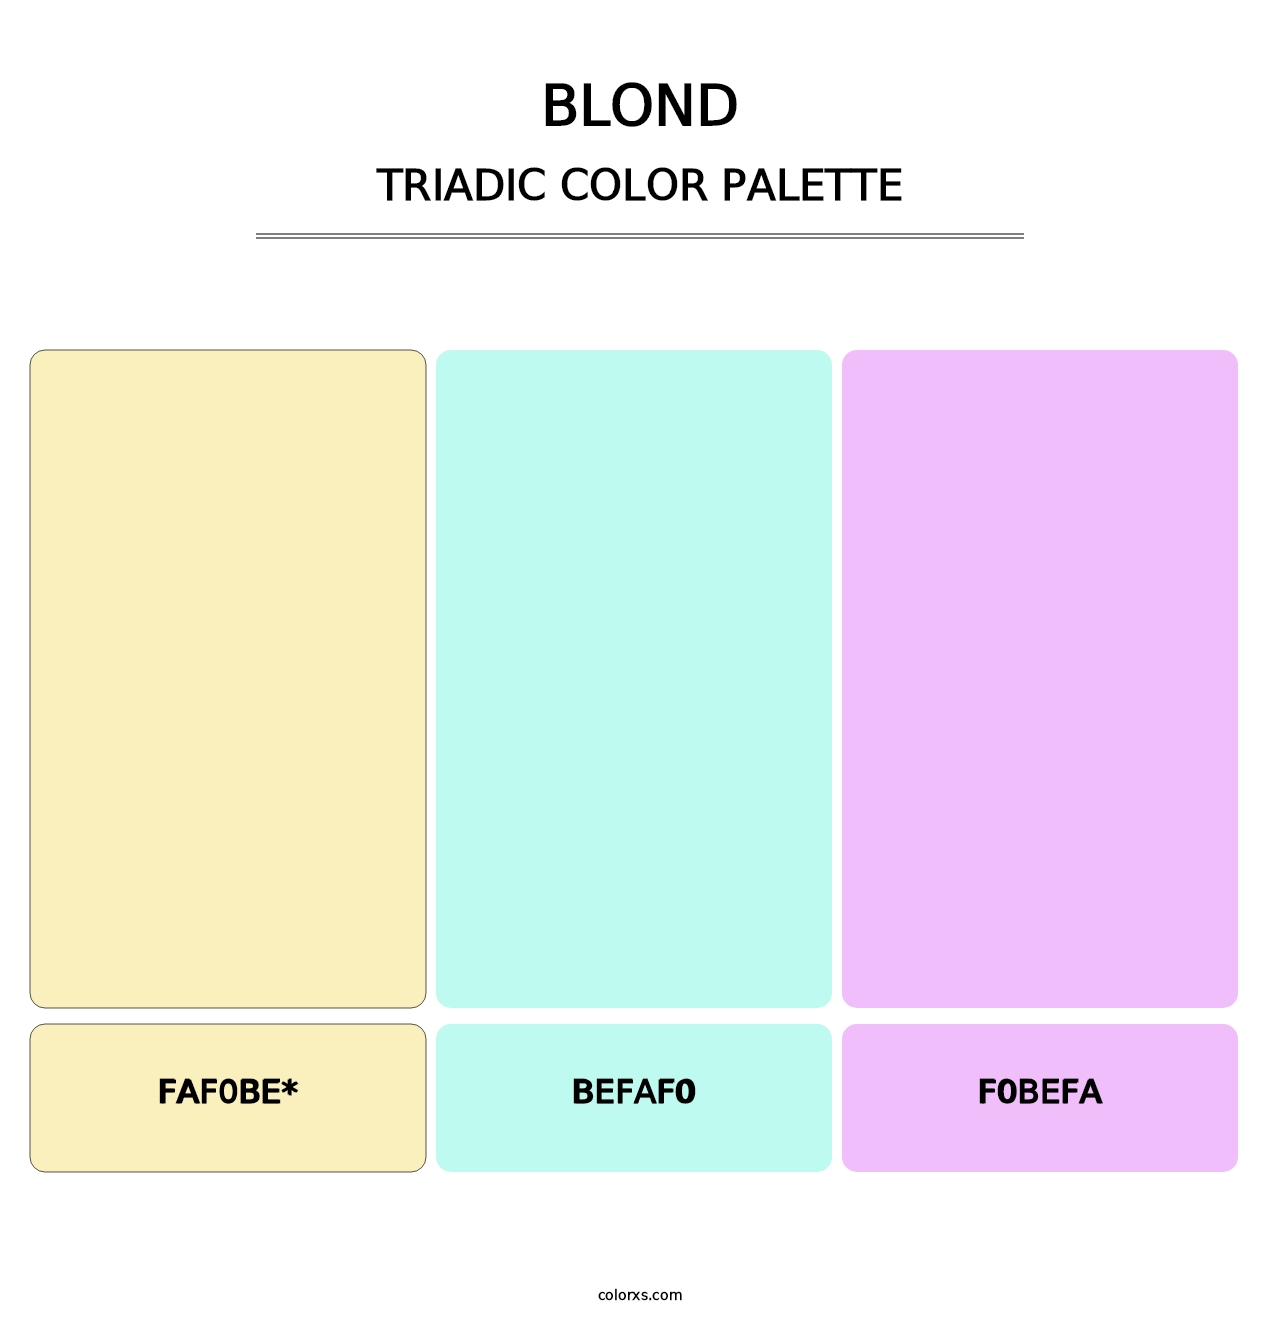 Blond - Triadic Color Palette